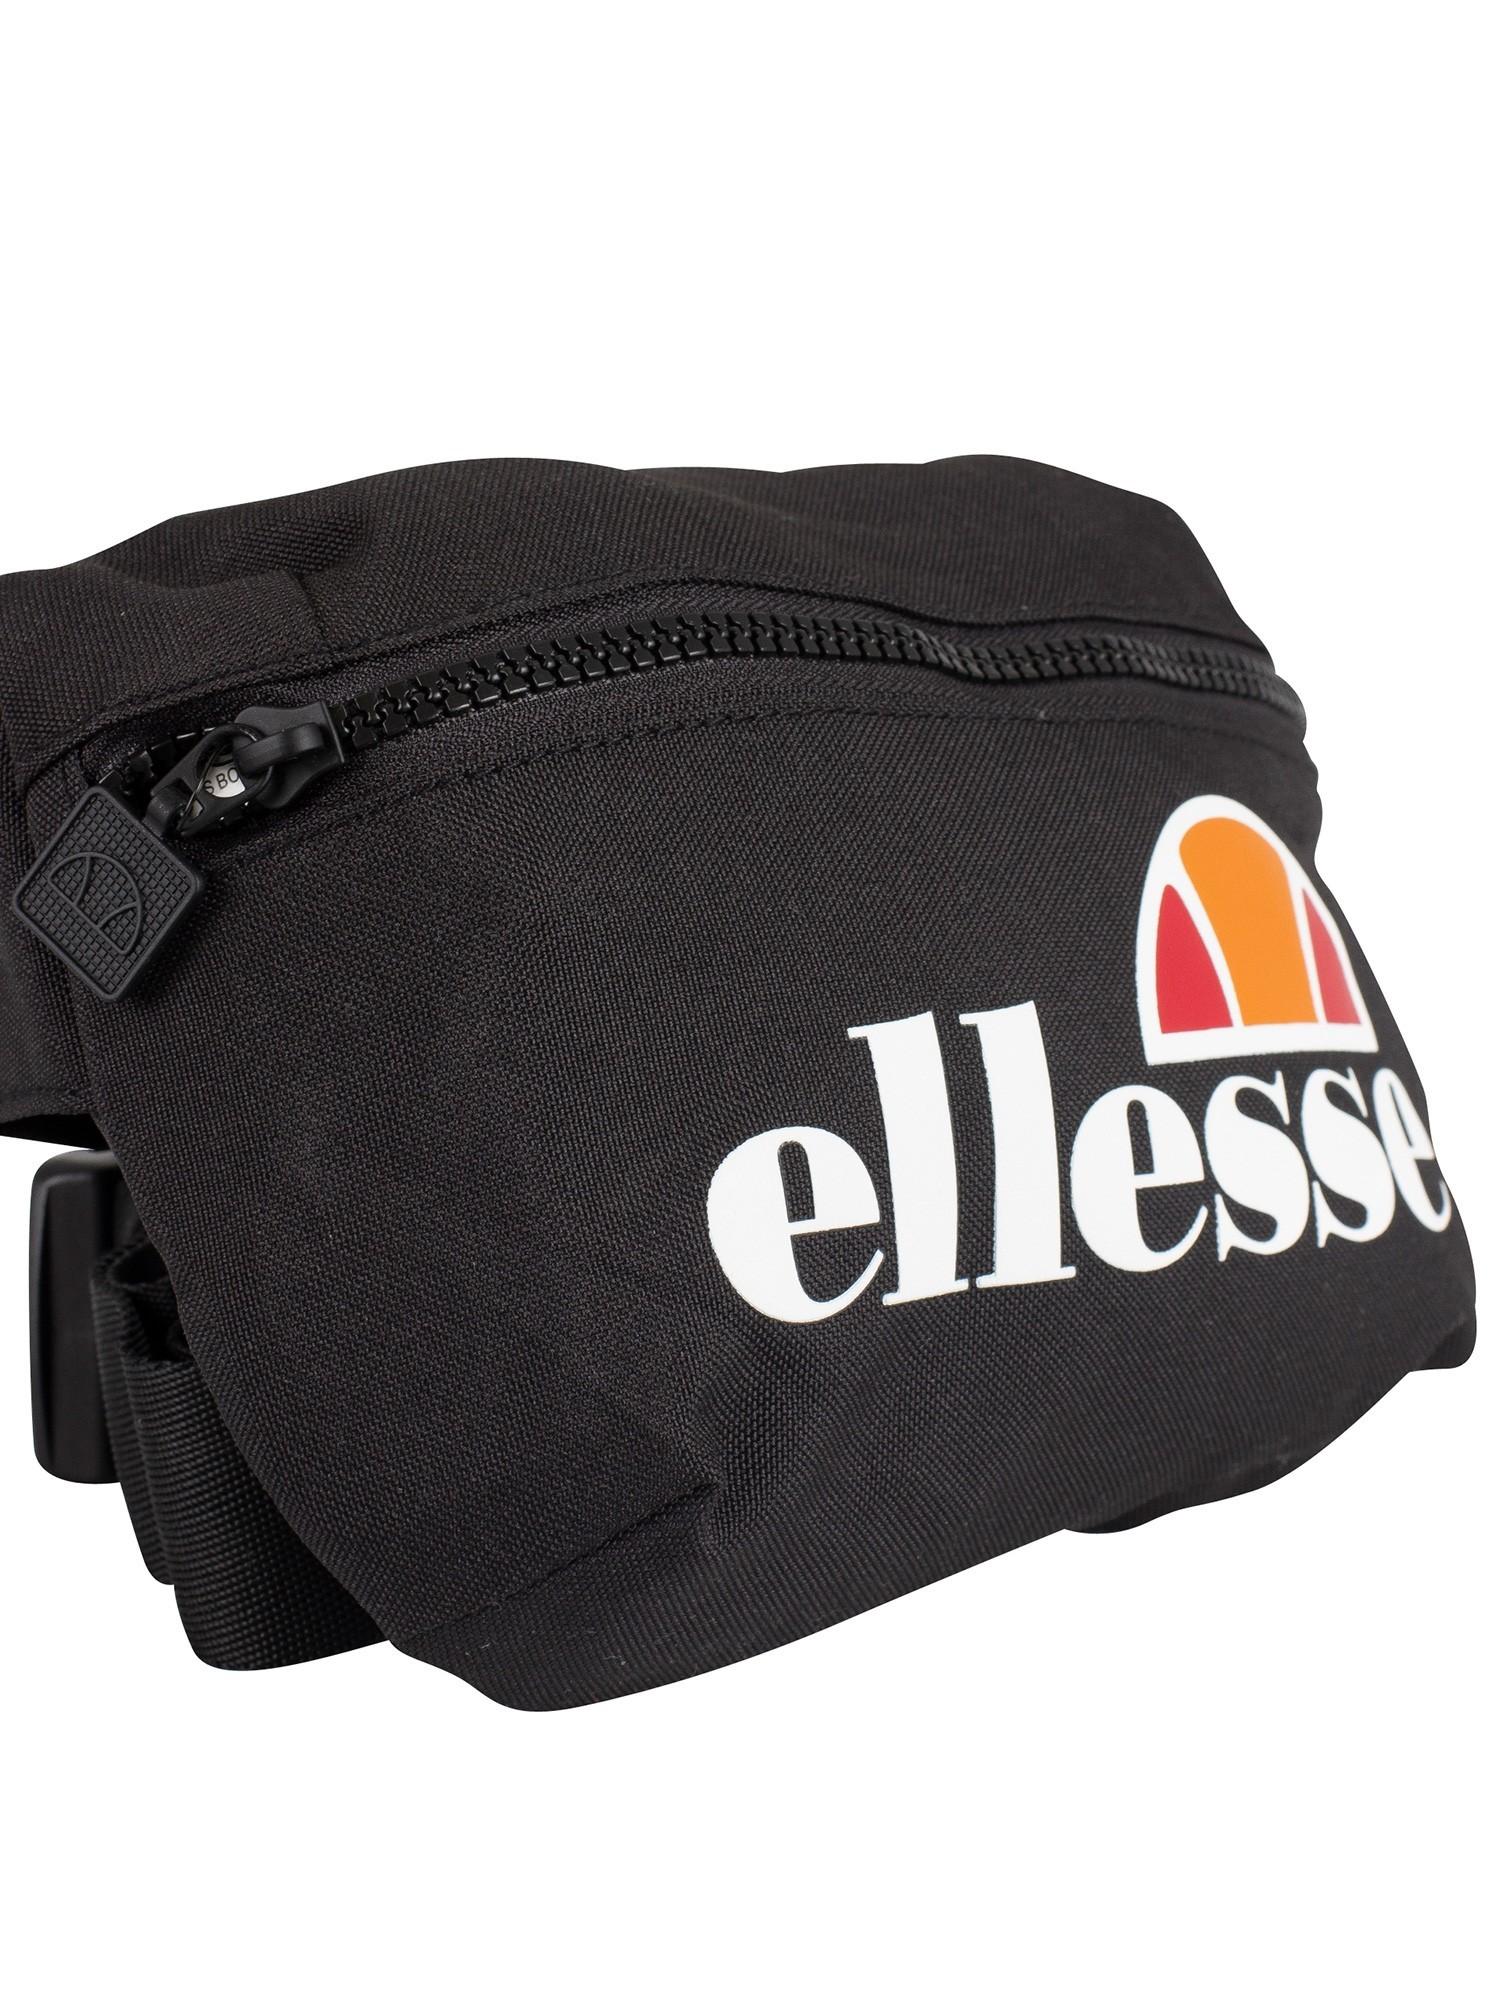 Ellesse Rubber Rosca Cross Body Bag in Black/Black (Black) for Men - Save  59% - Lyst